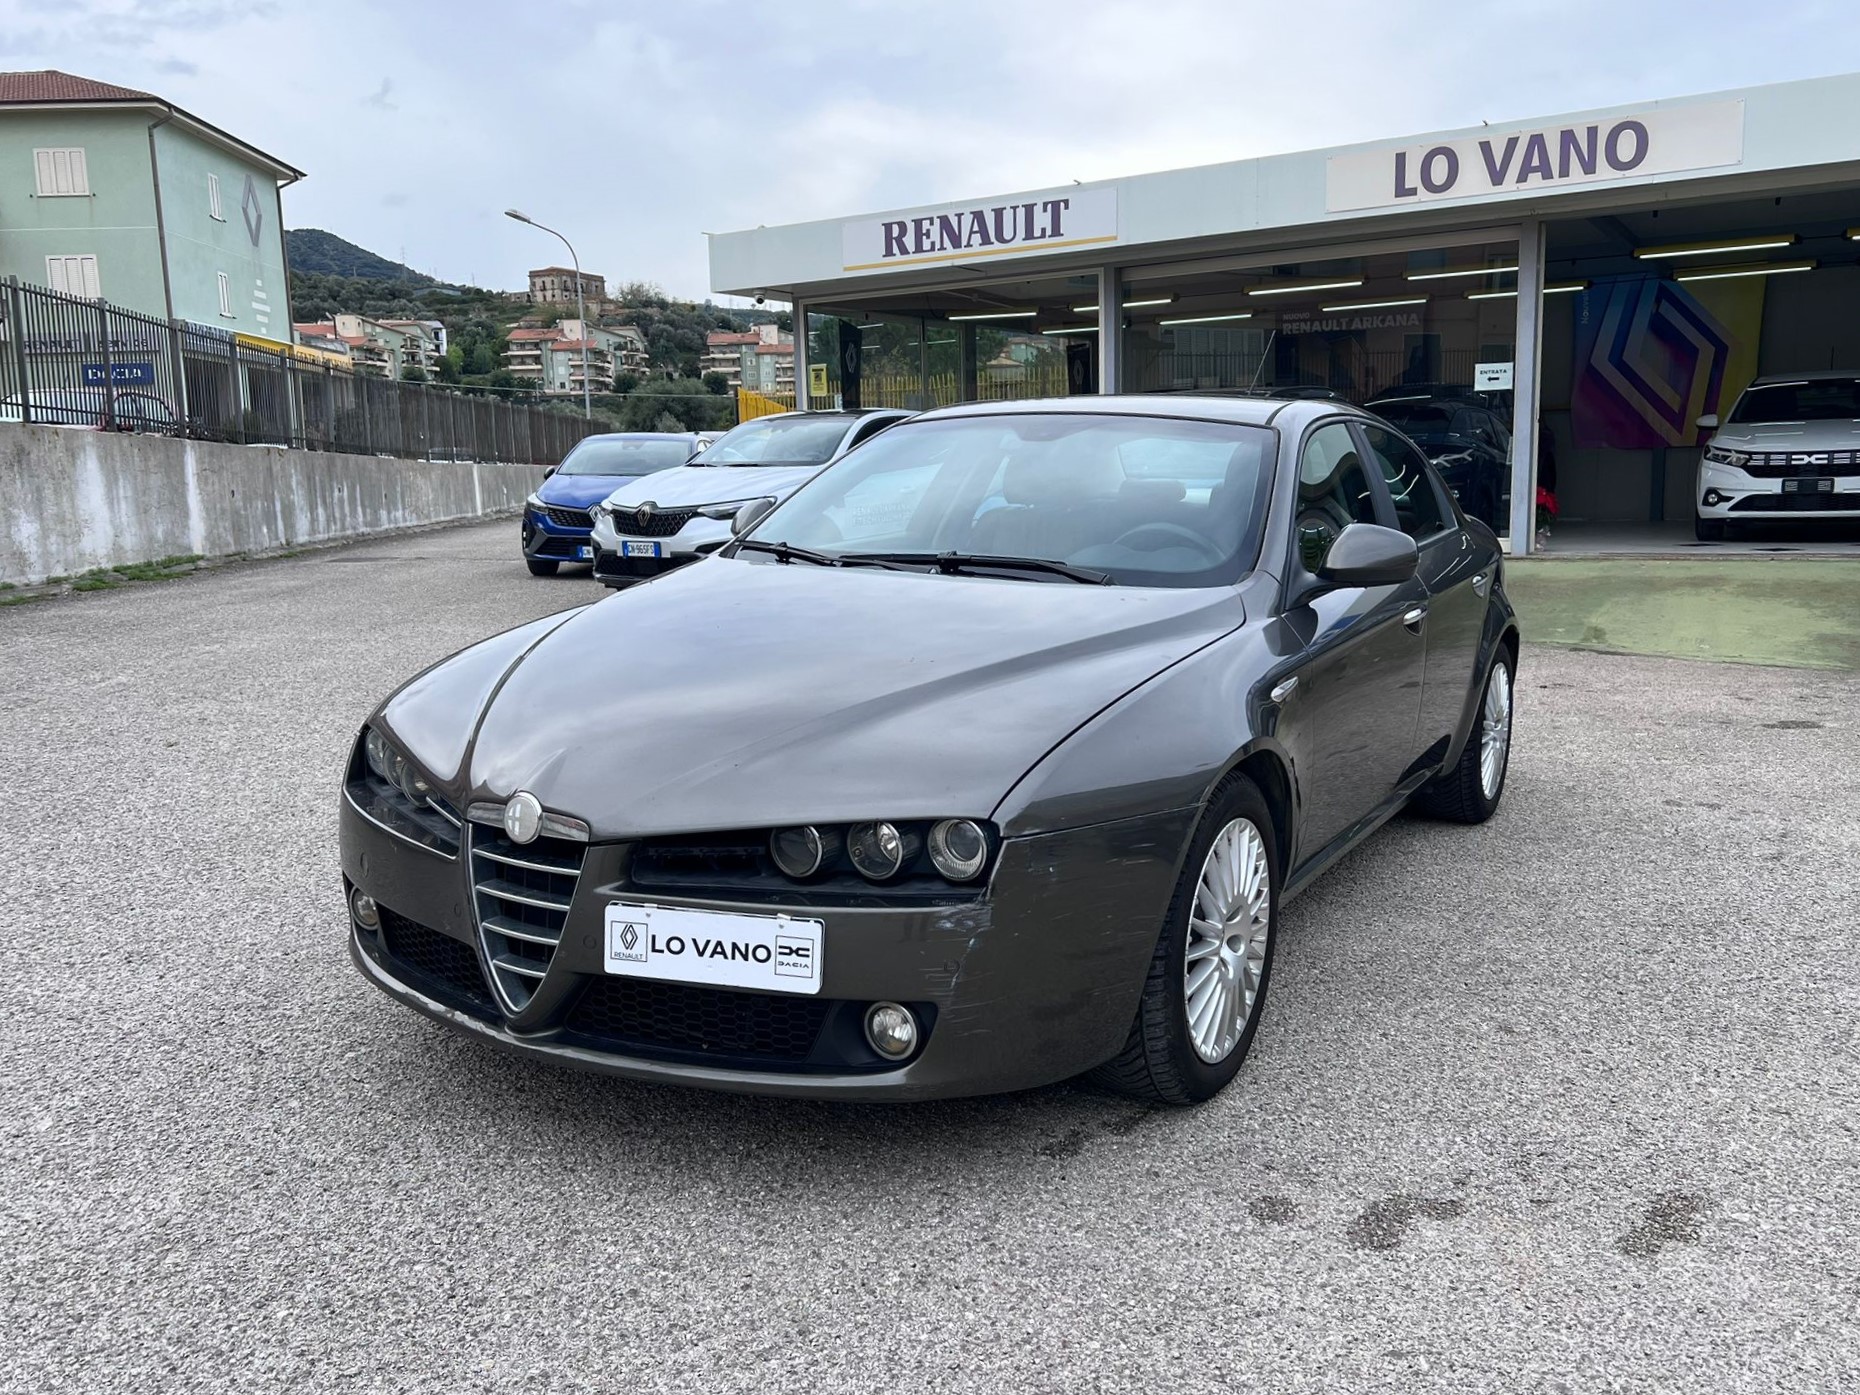 Alfa Romeo 159 1.9 JTDm Distinctive – Lo Vano